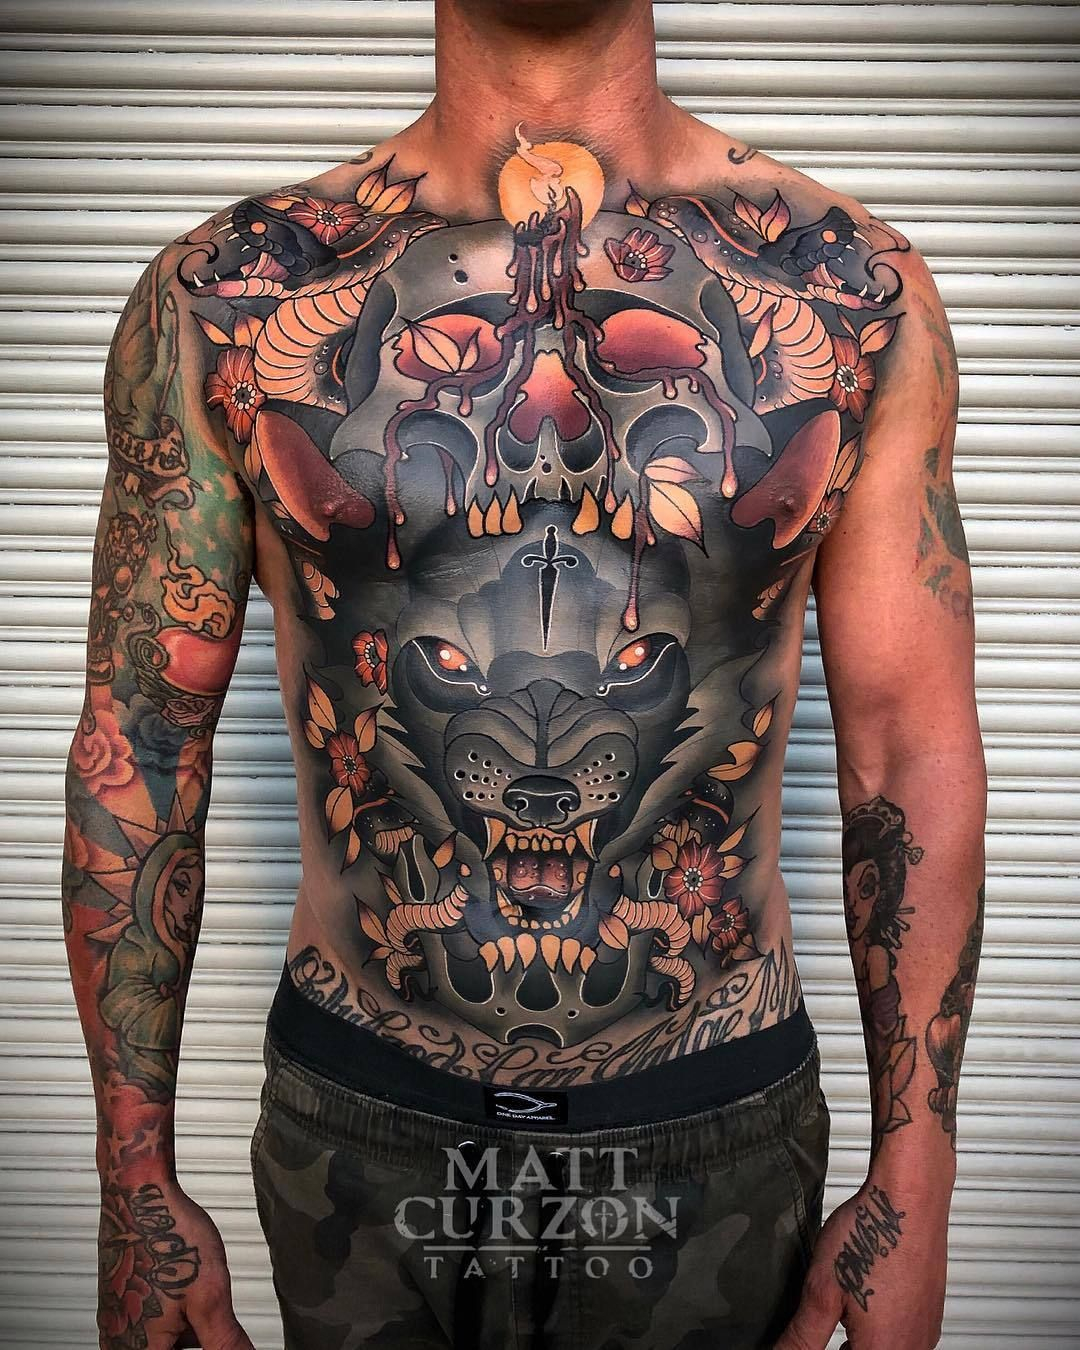 Matt Curzon Tattoos Torso Tattoos Stomach Tattoos Full Chest within sizing 1080 X 1350